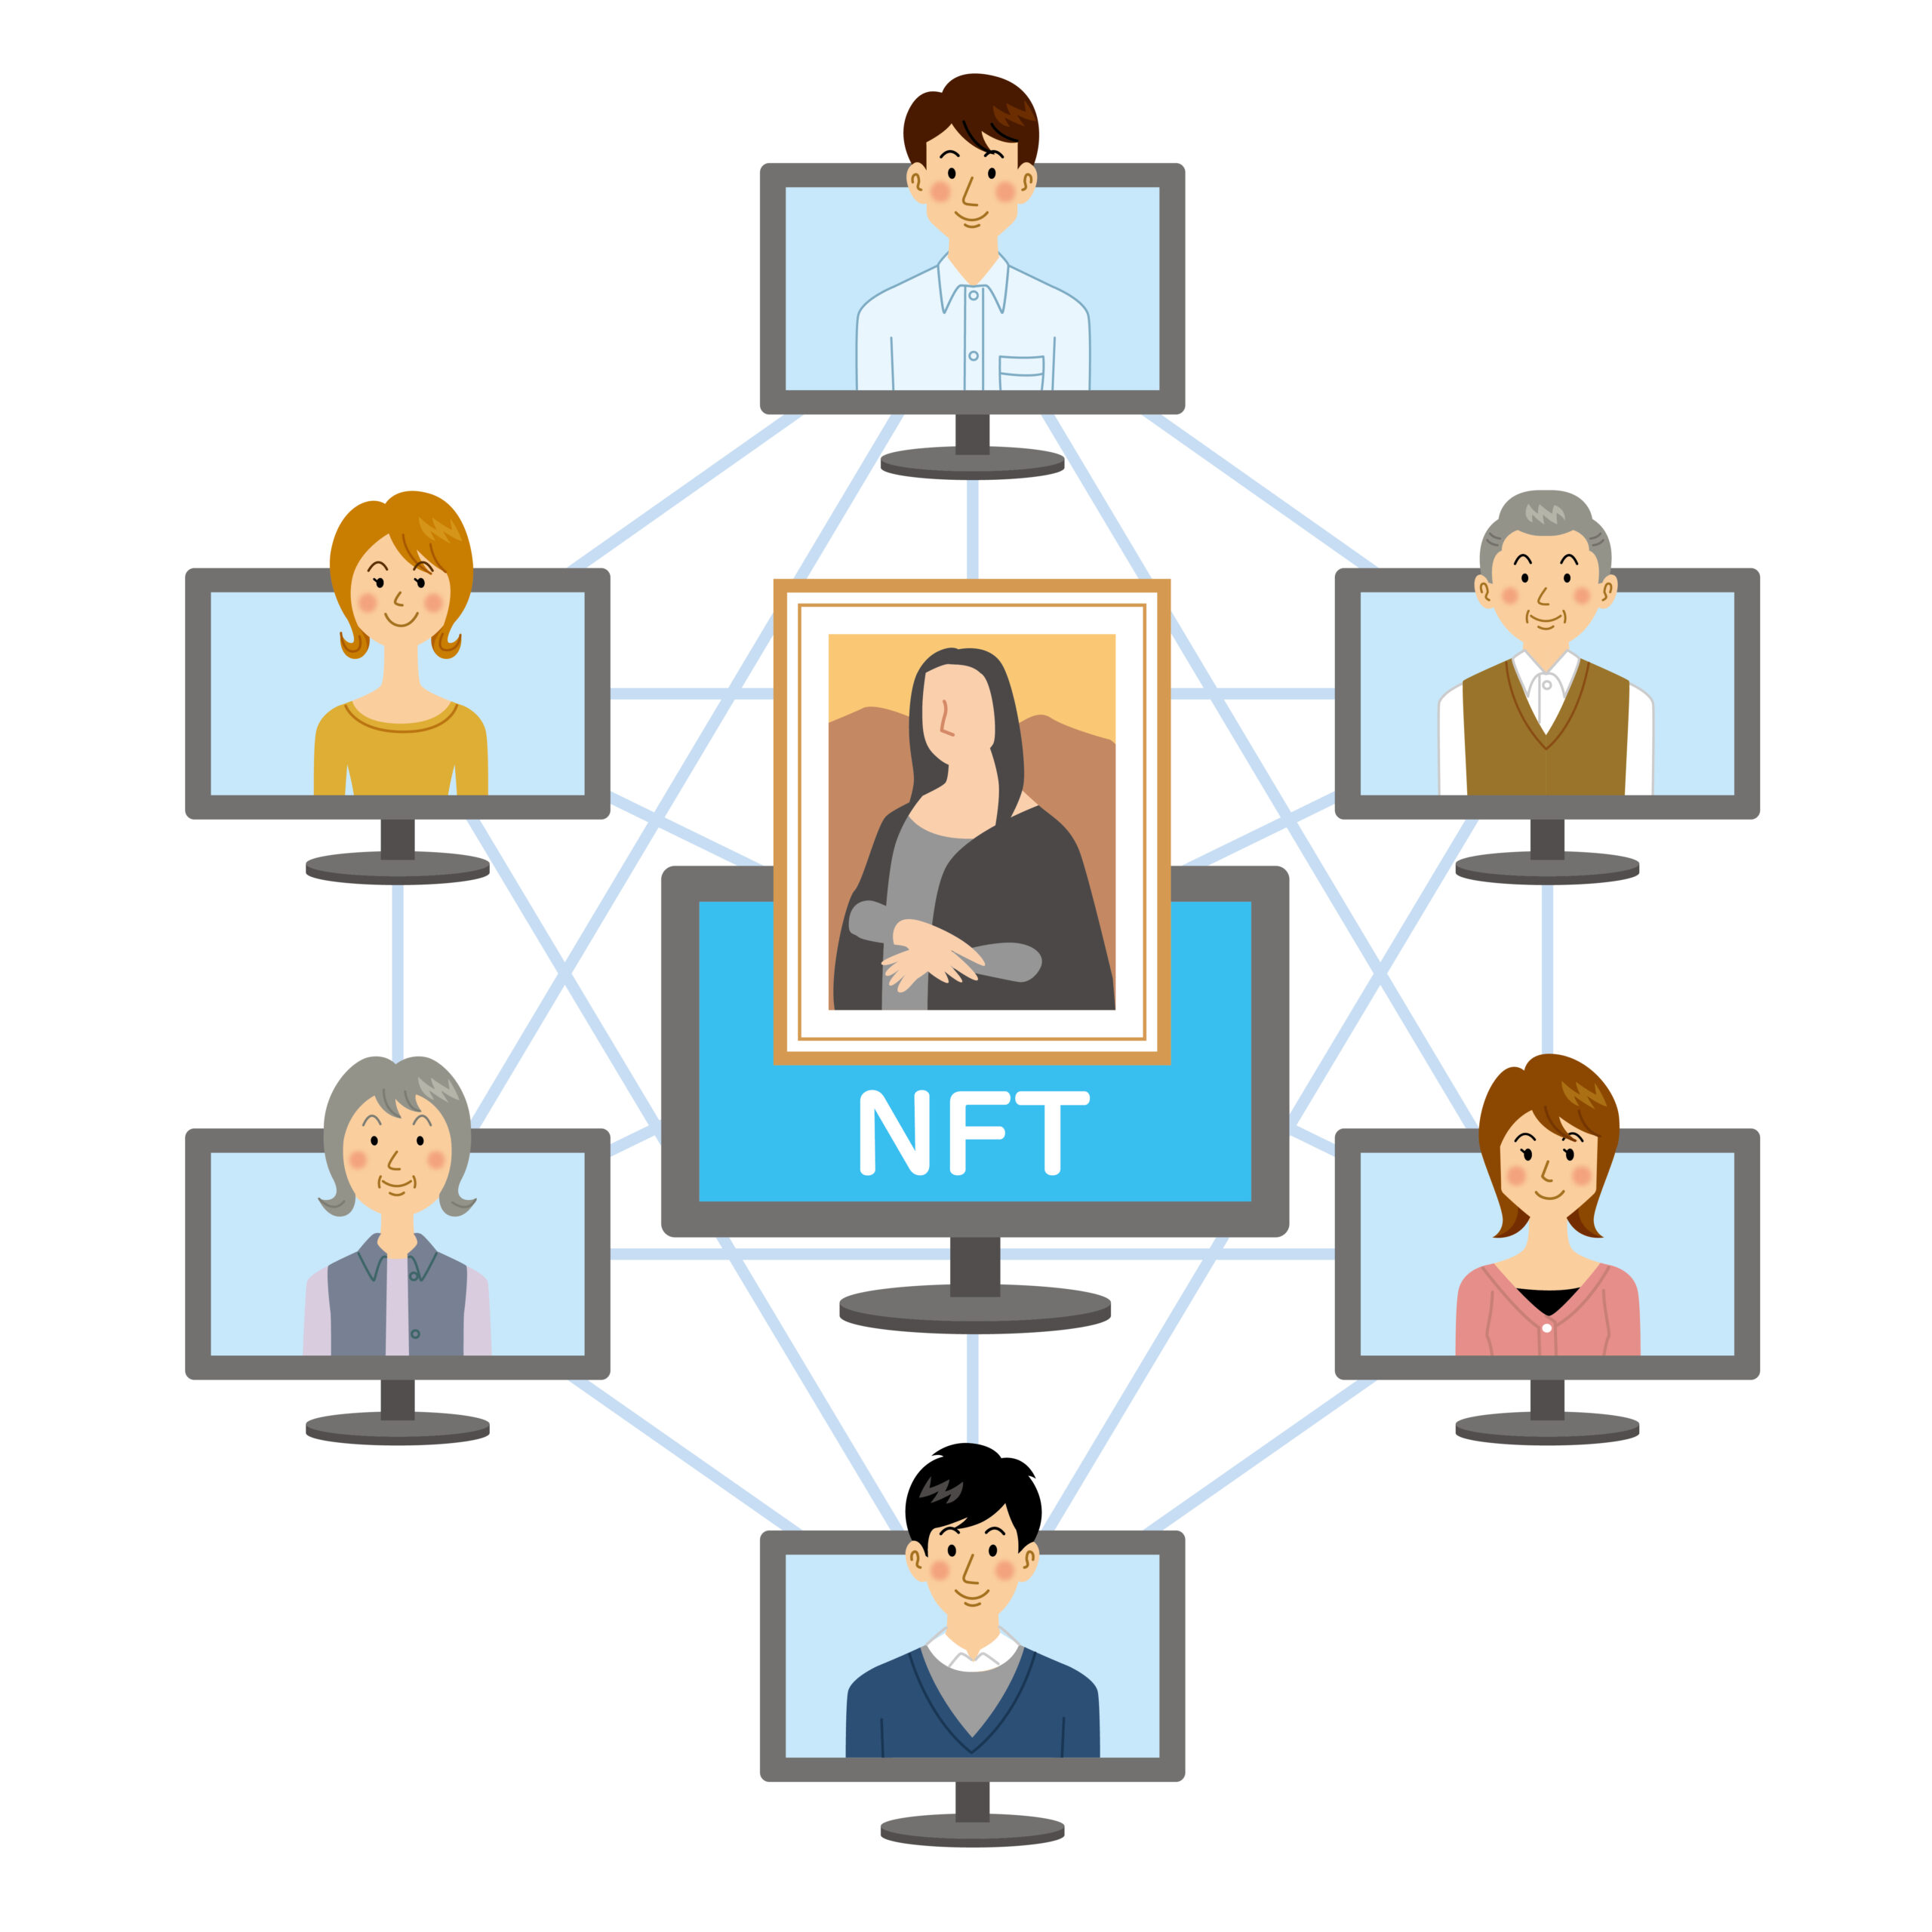 【NFT】今後の課題と可能性 | 話題を集めるサービスについて考える